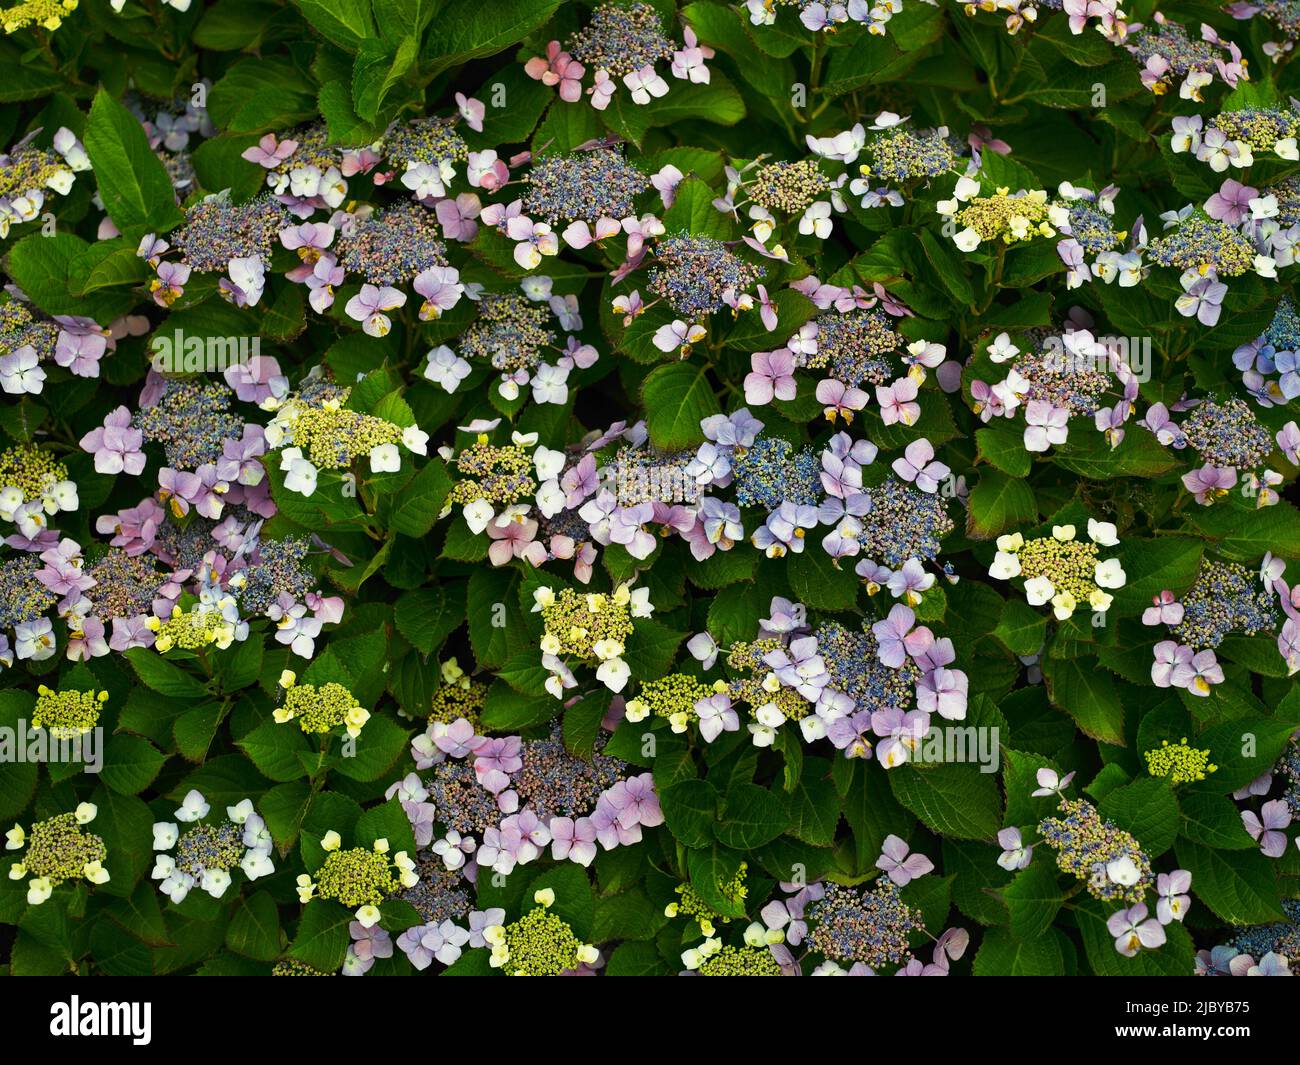 Flowering bush of flowering Lace Cap Hydrangea in various stages of flowering Stock Photo